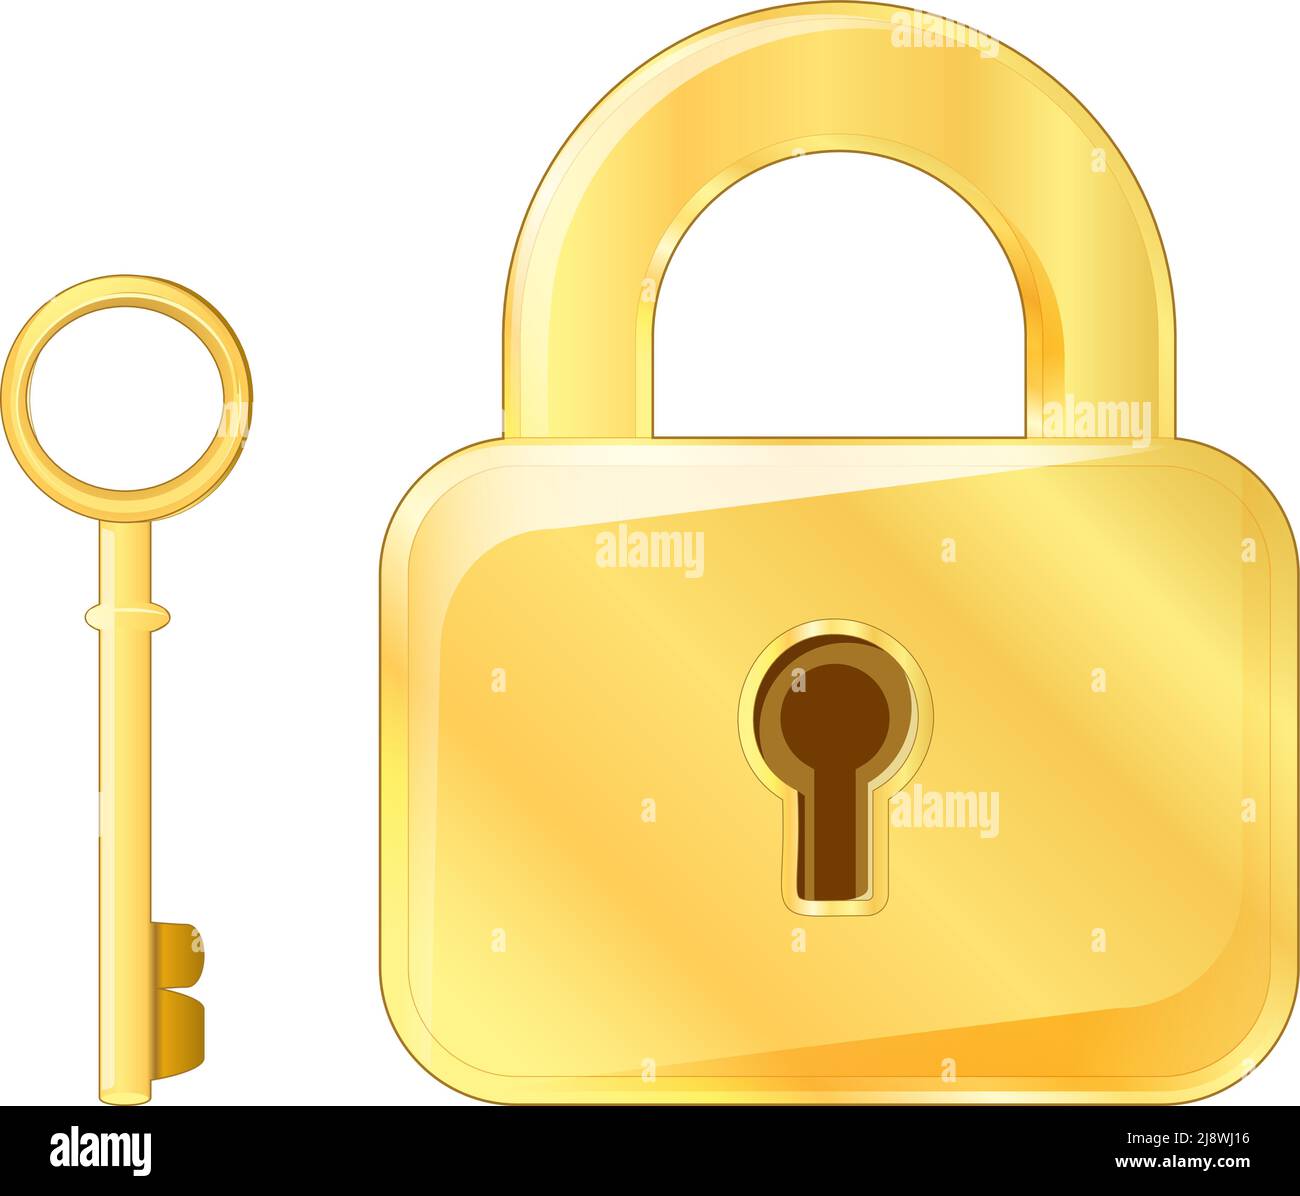 Locked and unlocked gold locks with keys Vector Image